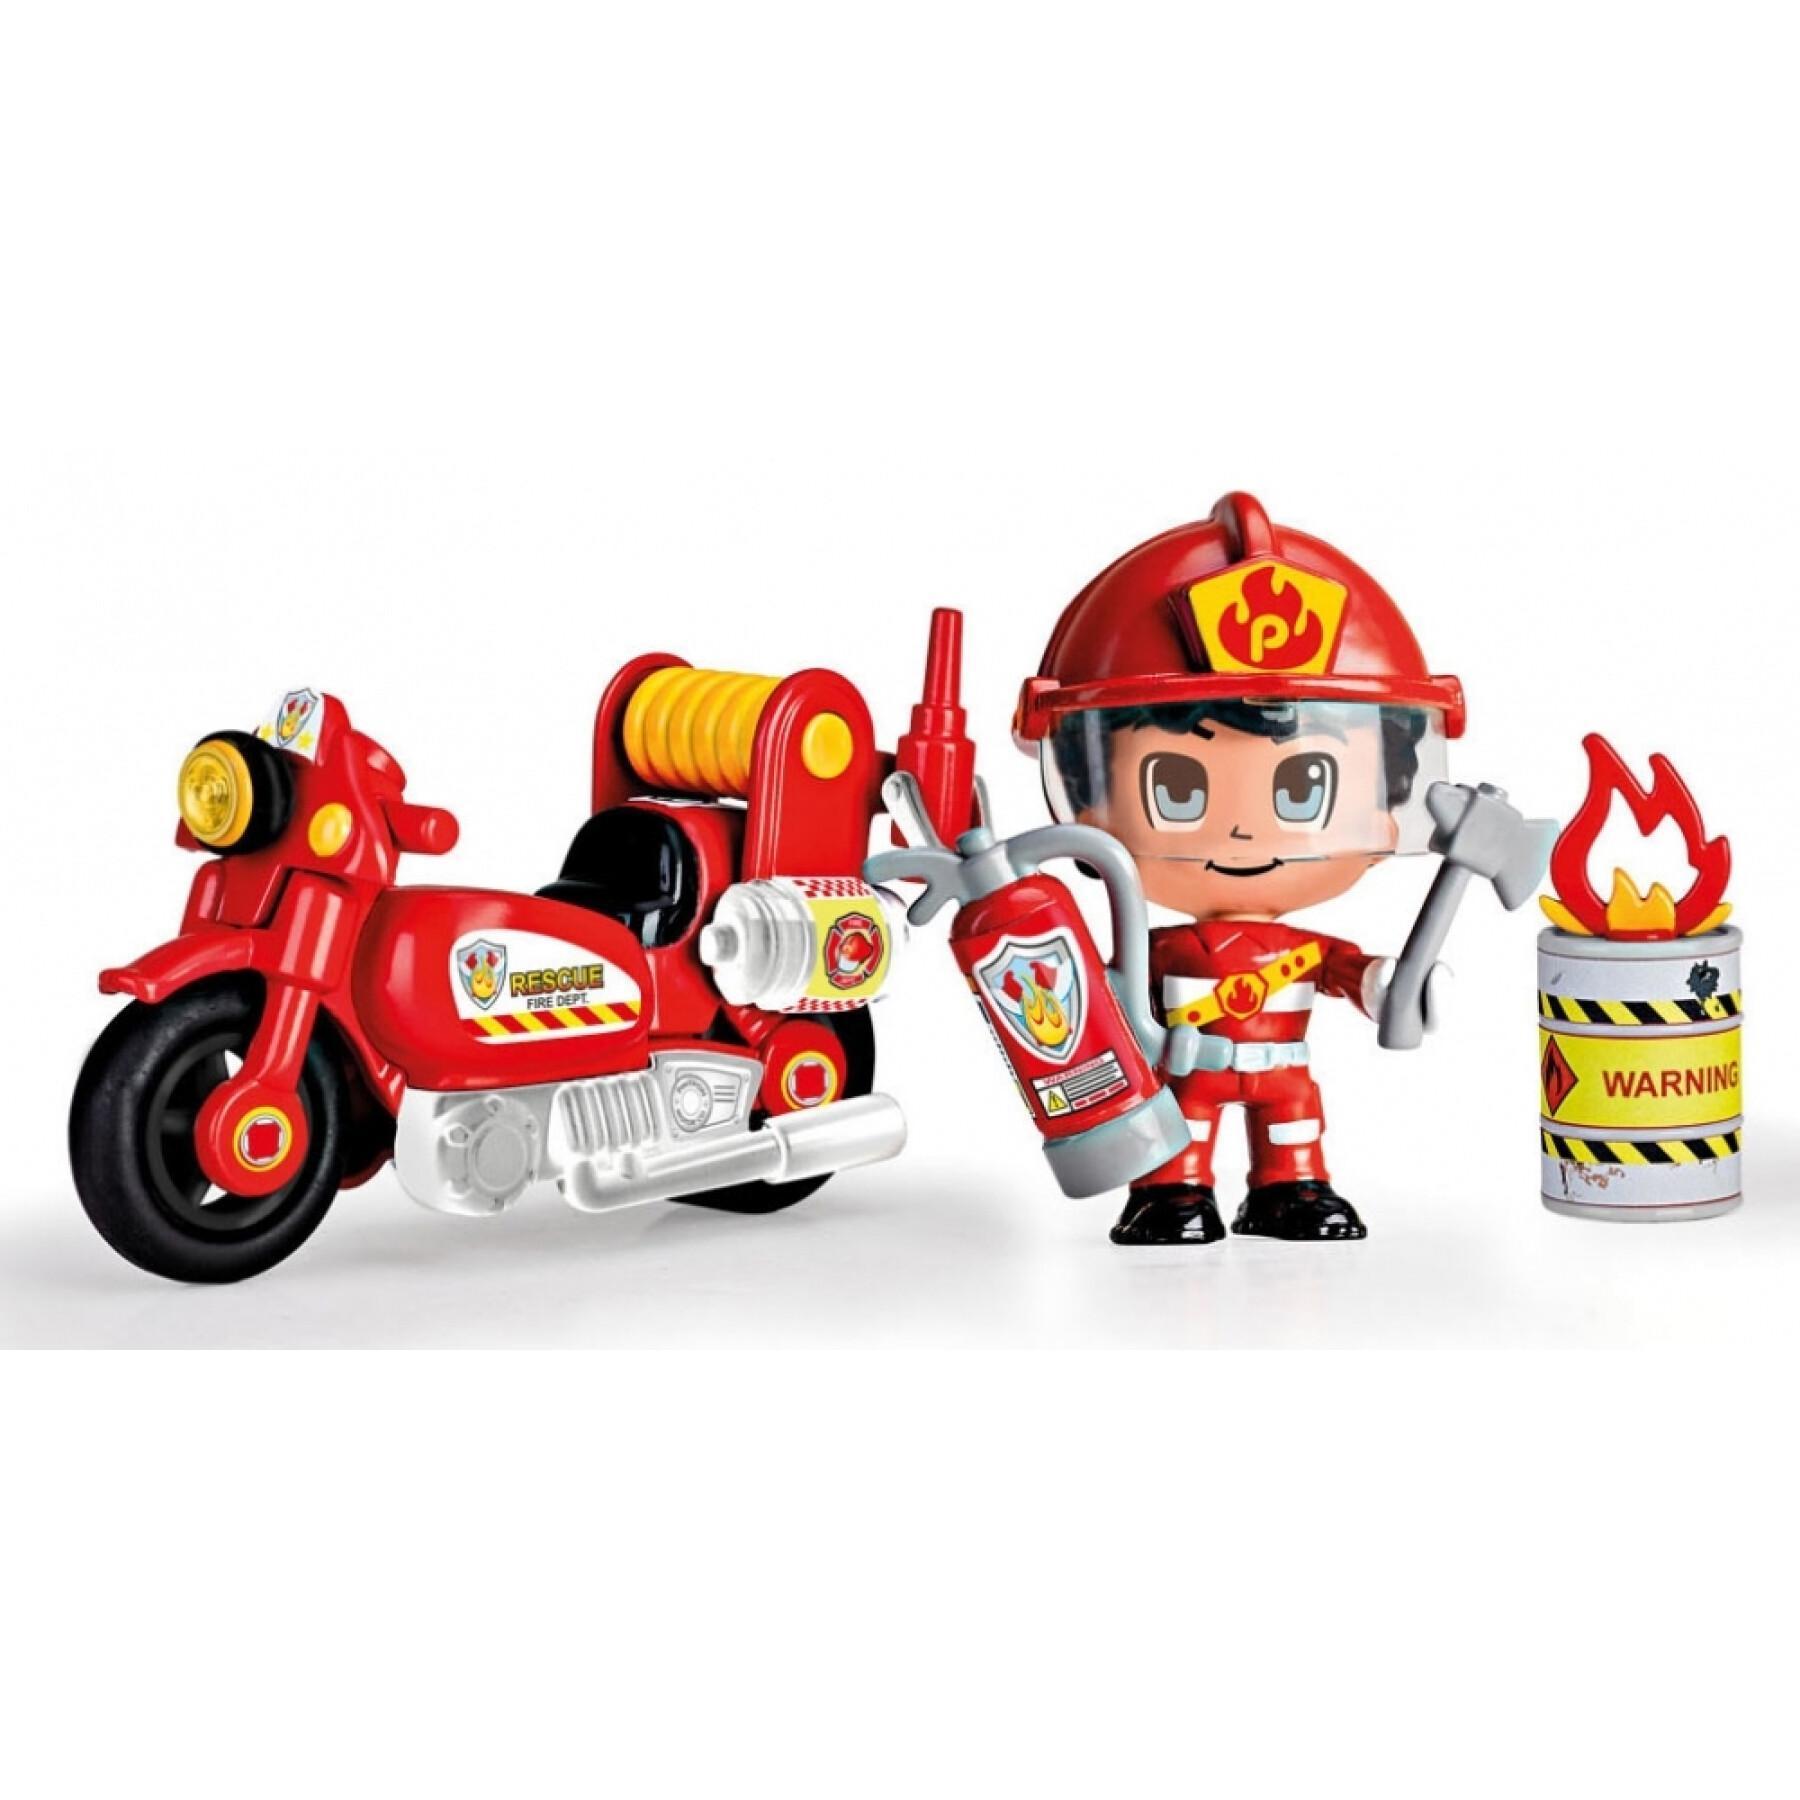 Fireman's motorcycle Pinypon